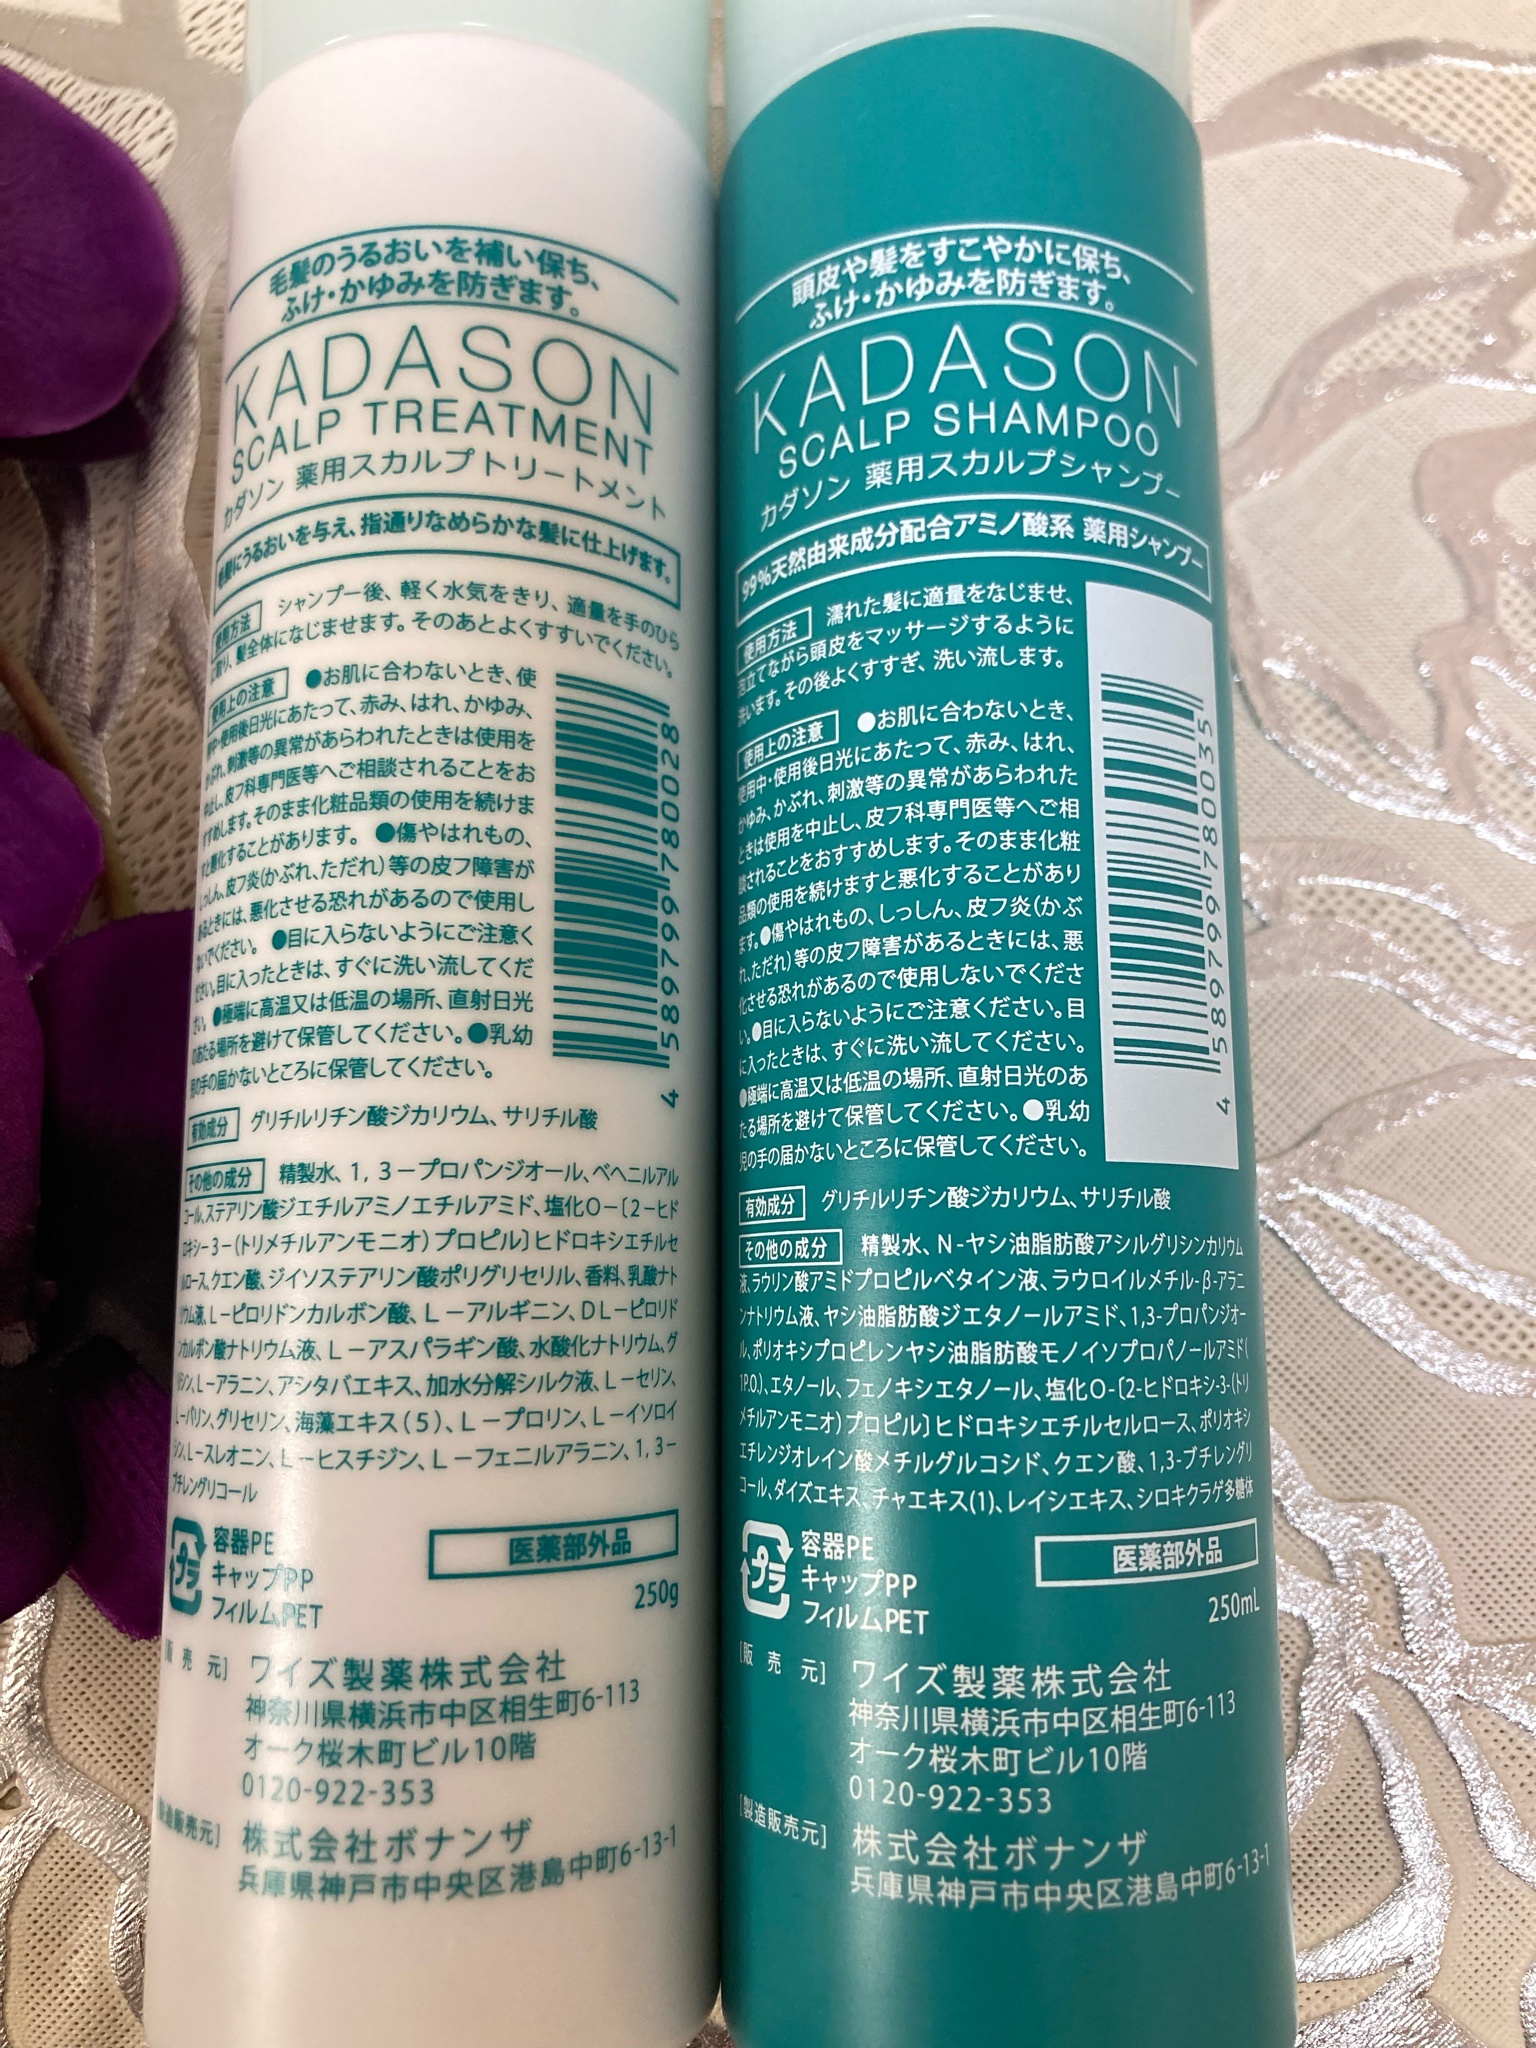 KADASON (カダソン) / カダソン 薬用スカルプシャンプー